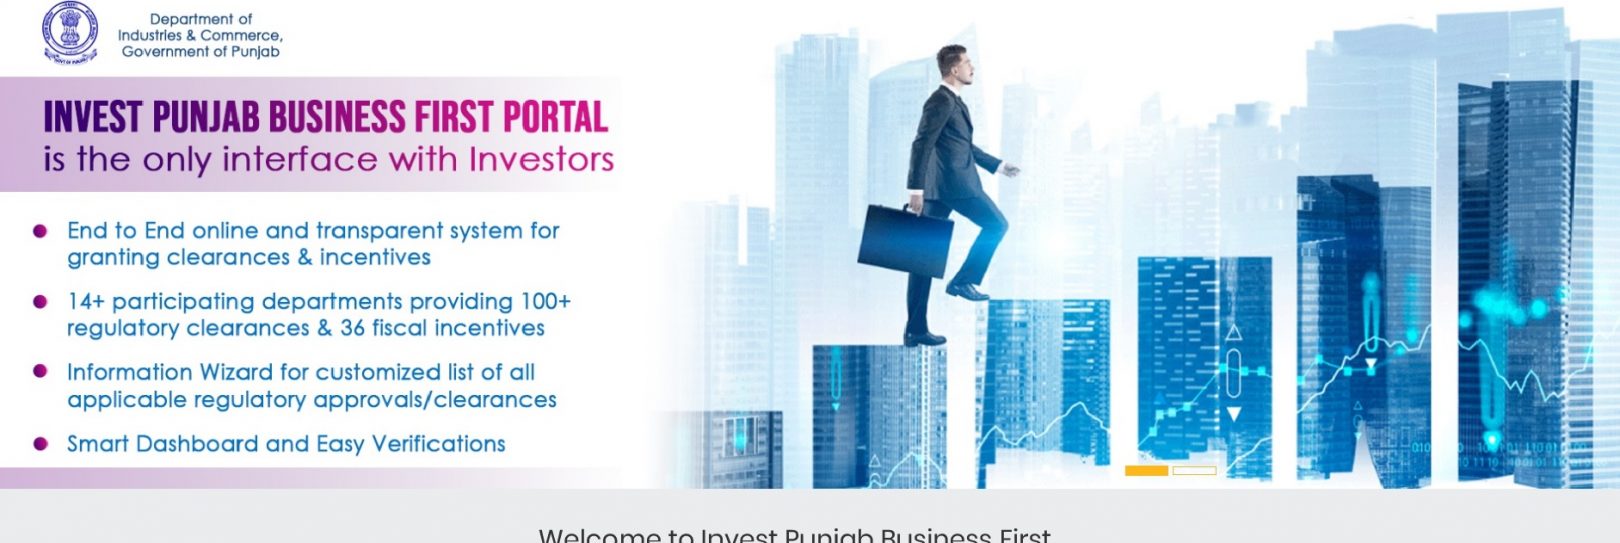 Invest Punjab Business First Portal